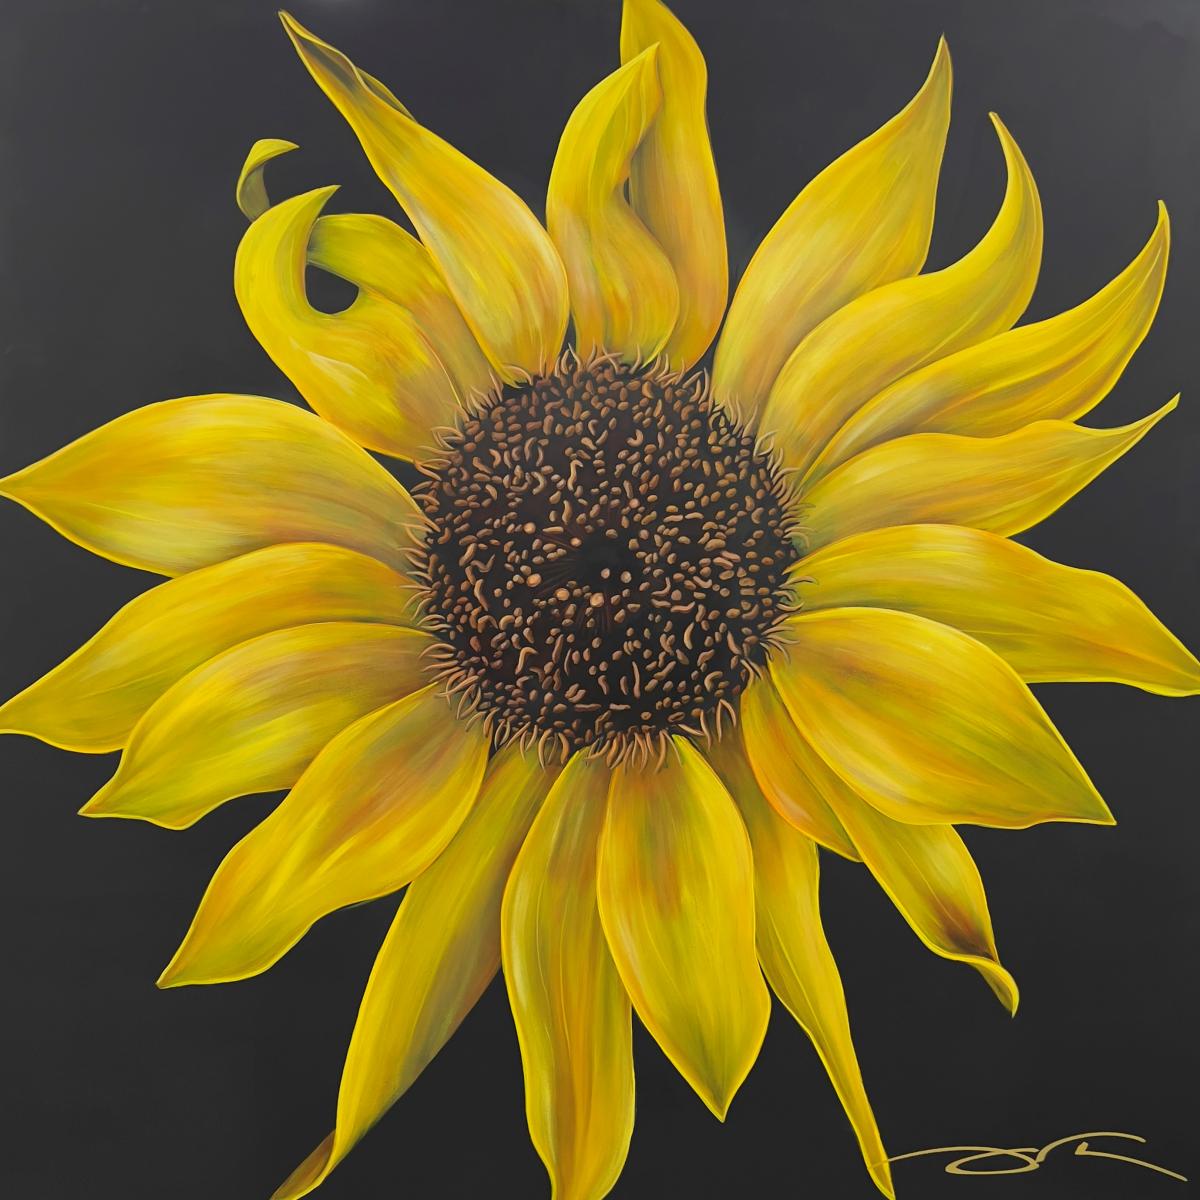 Sunflower
60x60 on Canvas